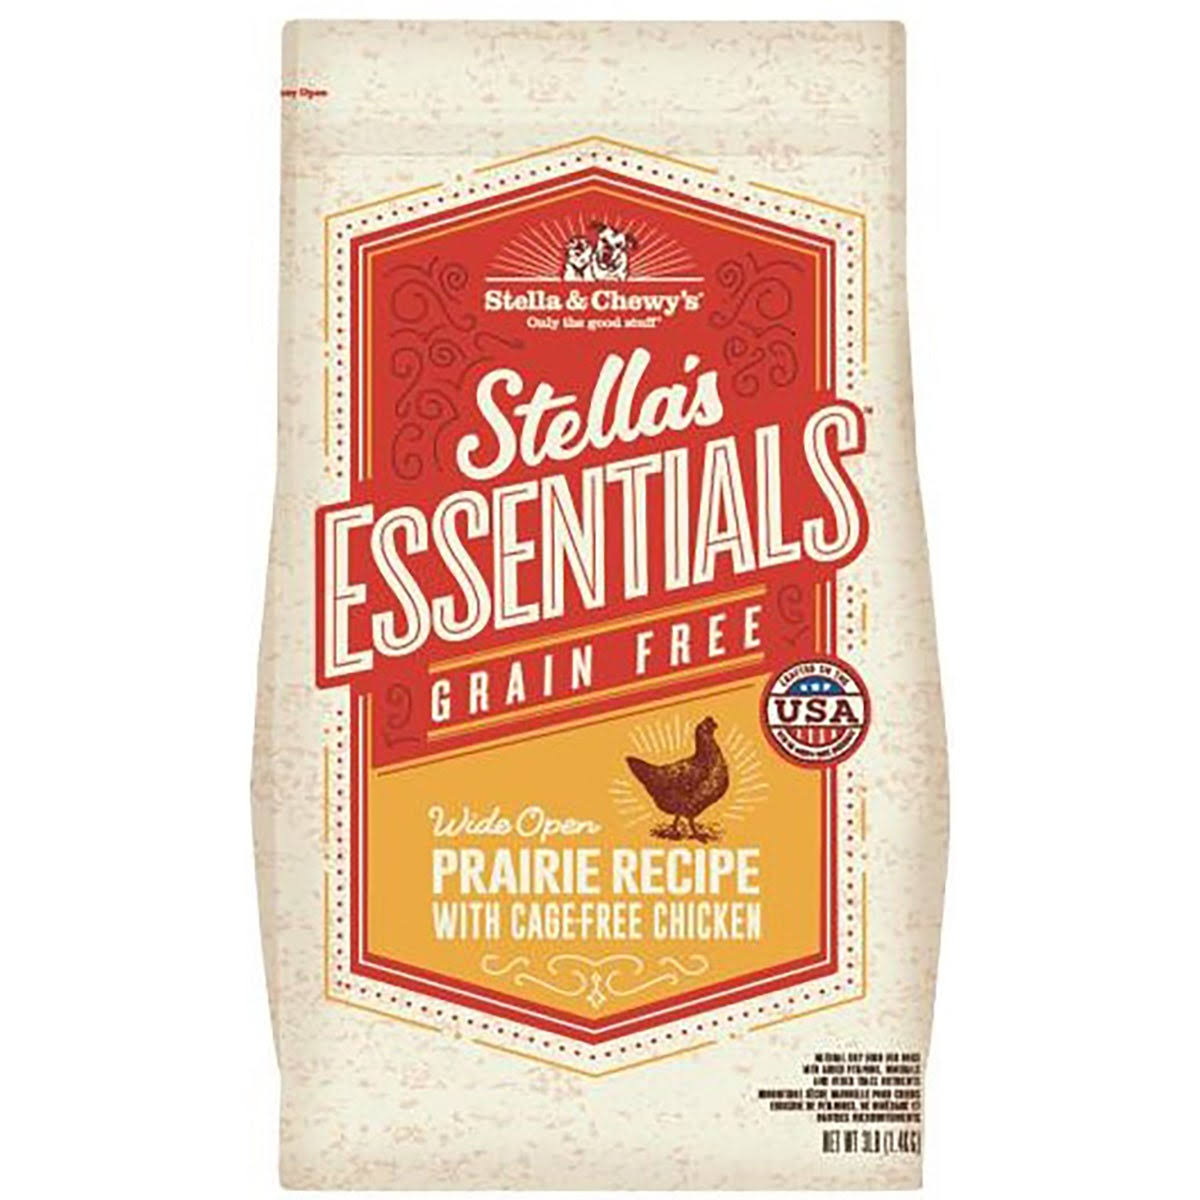 Stella & Chewy's Essentials Grain-Free Cage-Free Chicken & Lentils Recipe Dog Food - 3-Lbs.